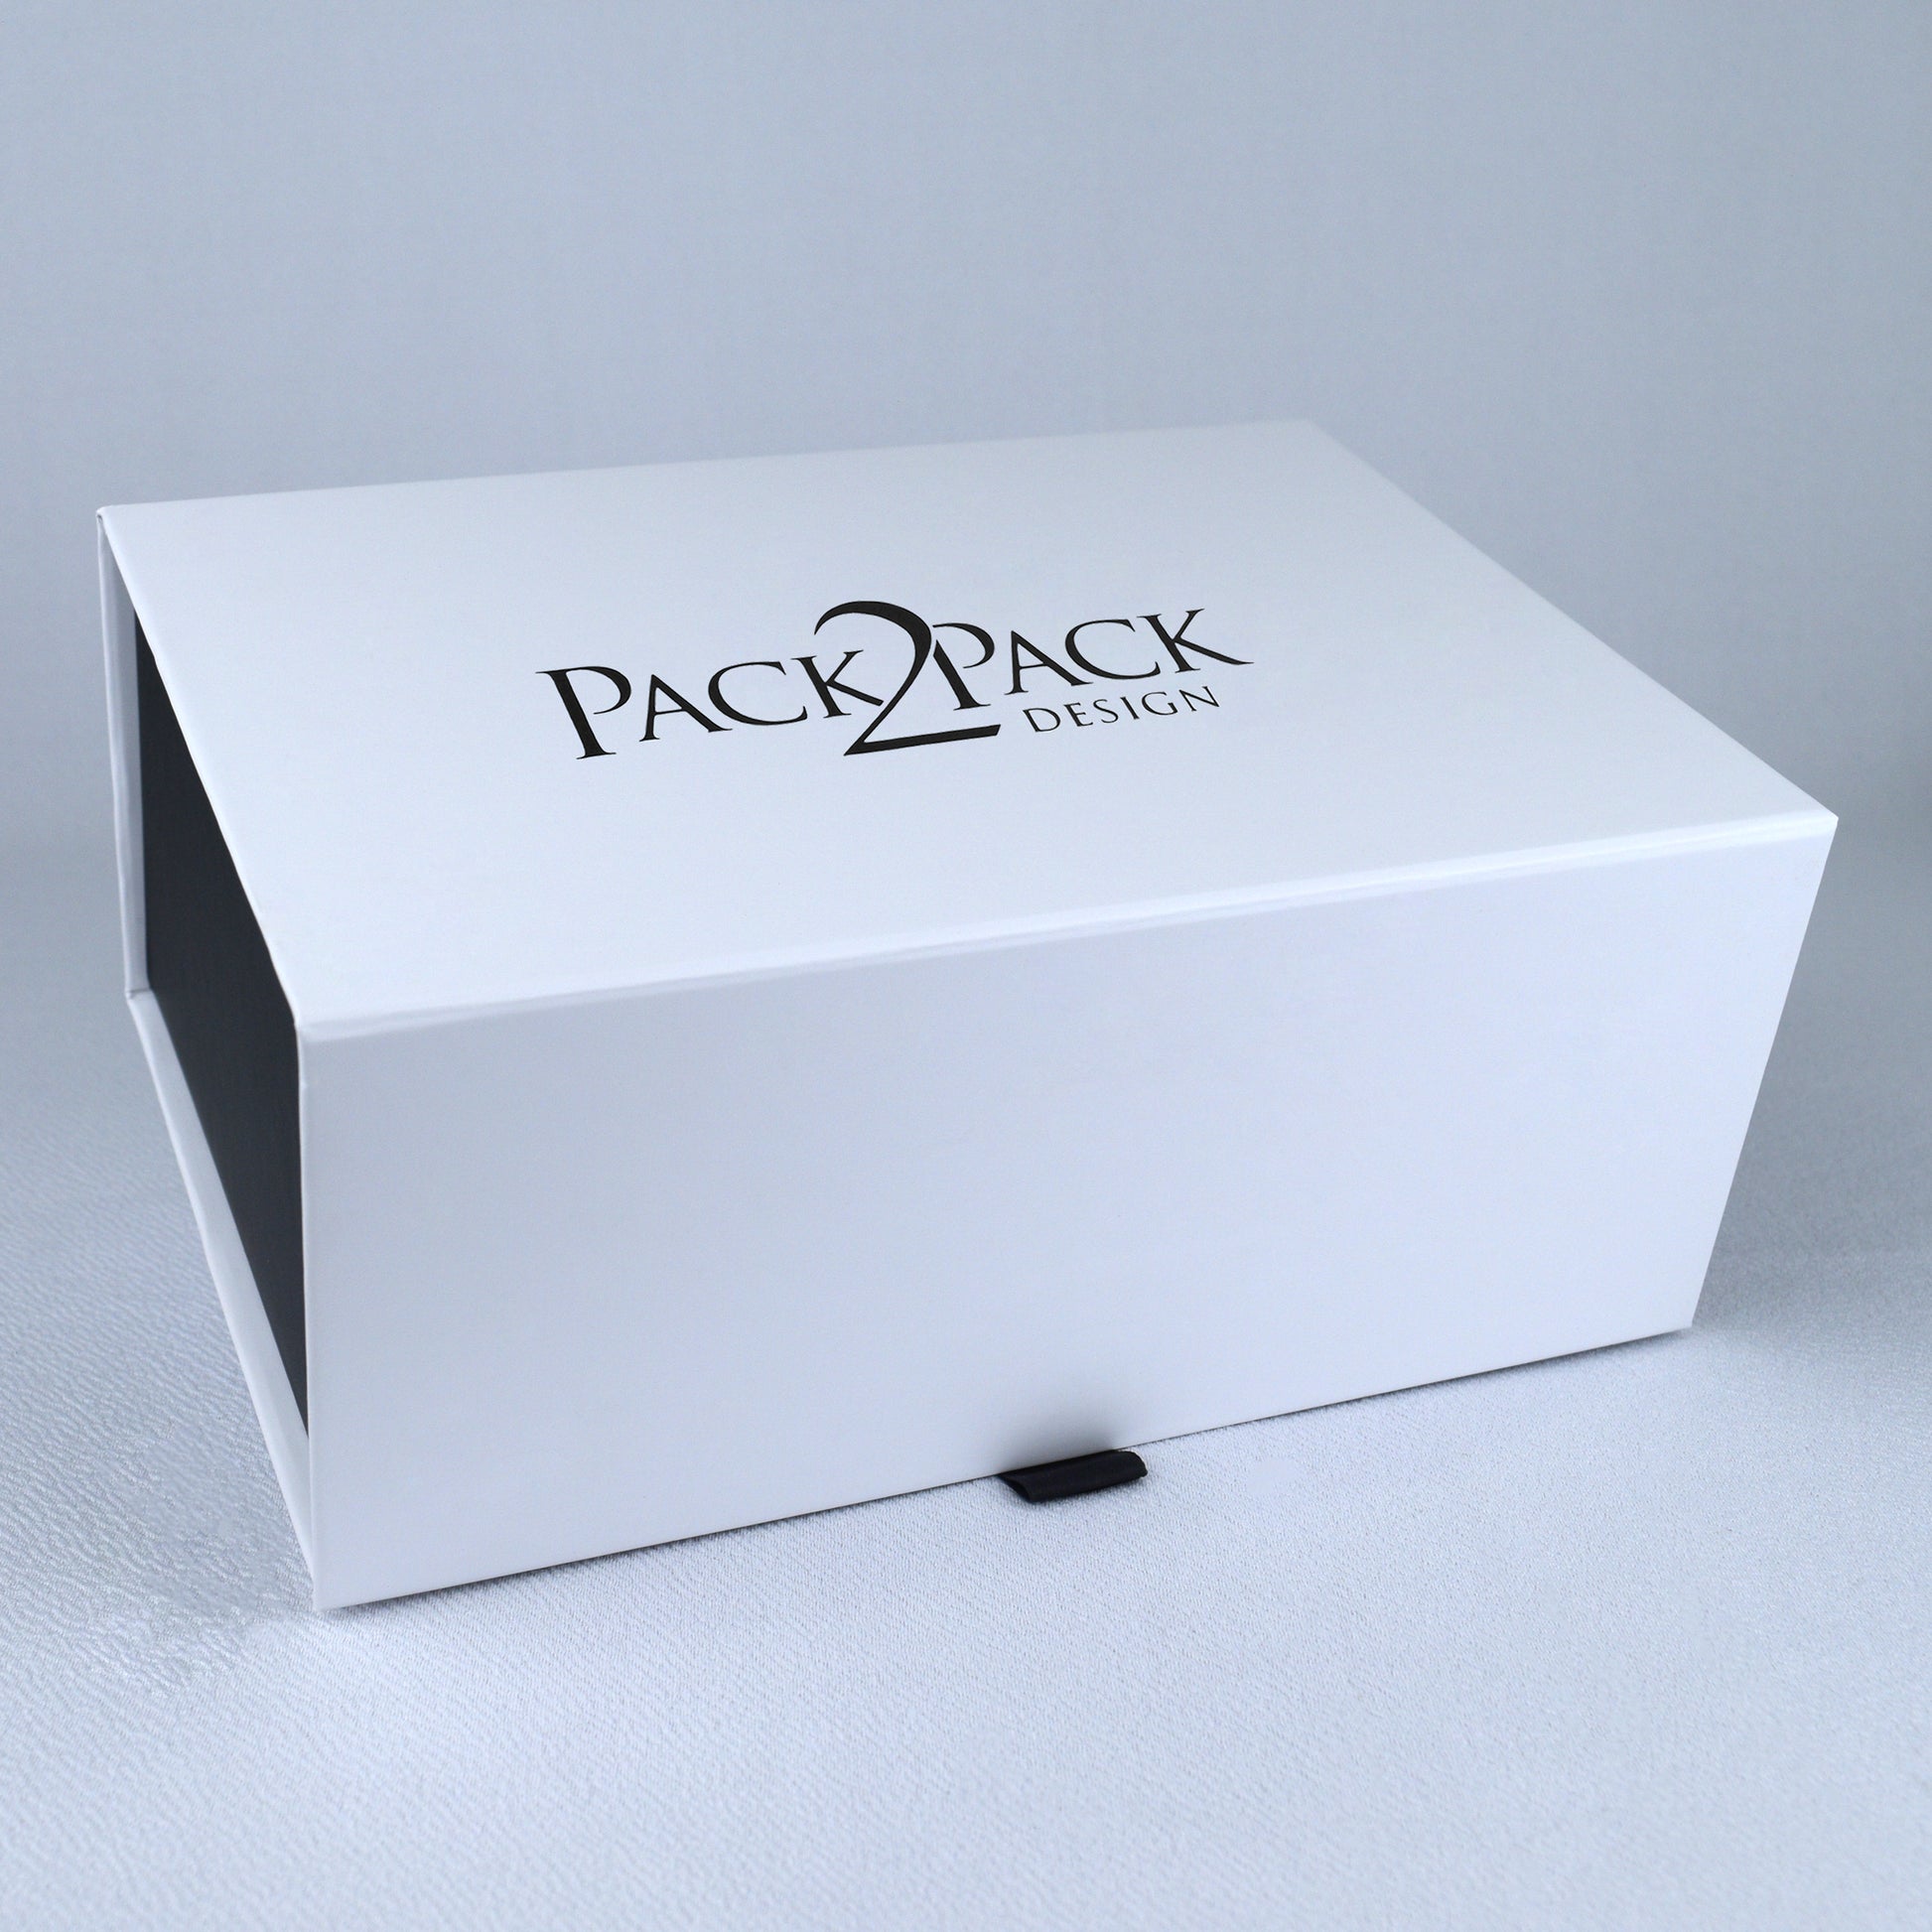 Premium Black gift box - Magnetic Gift Box